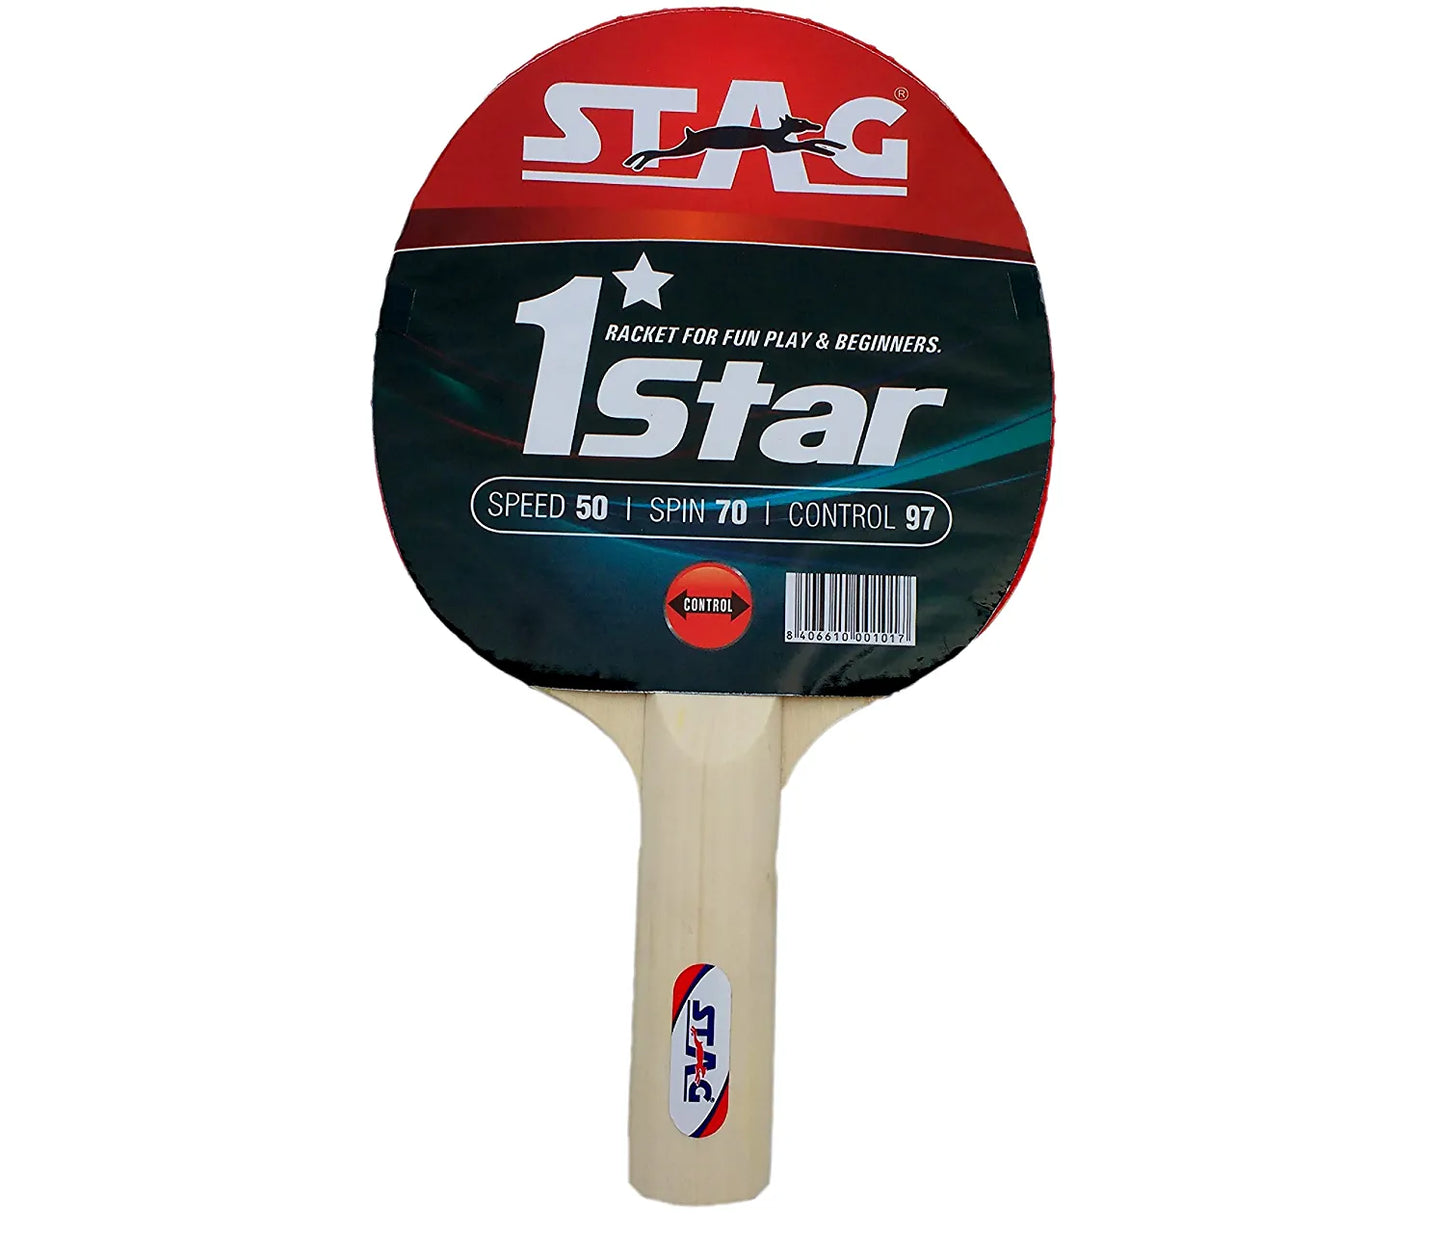 Stag 1 Star Table Tennis Racket - Red/Black - Best Price online Prokicksports.com